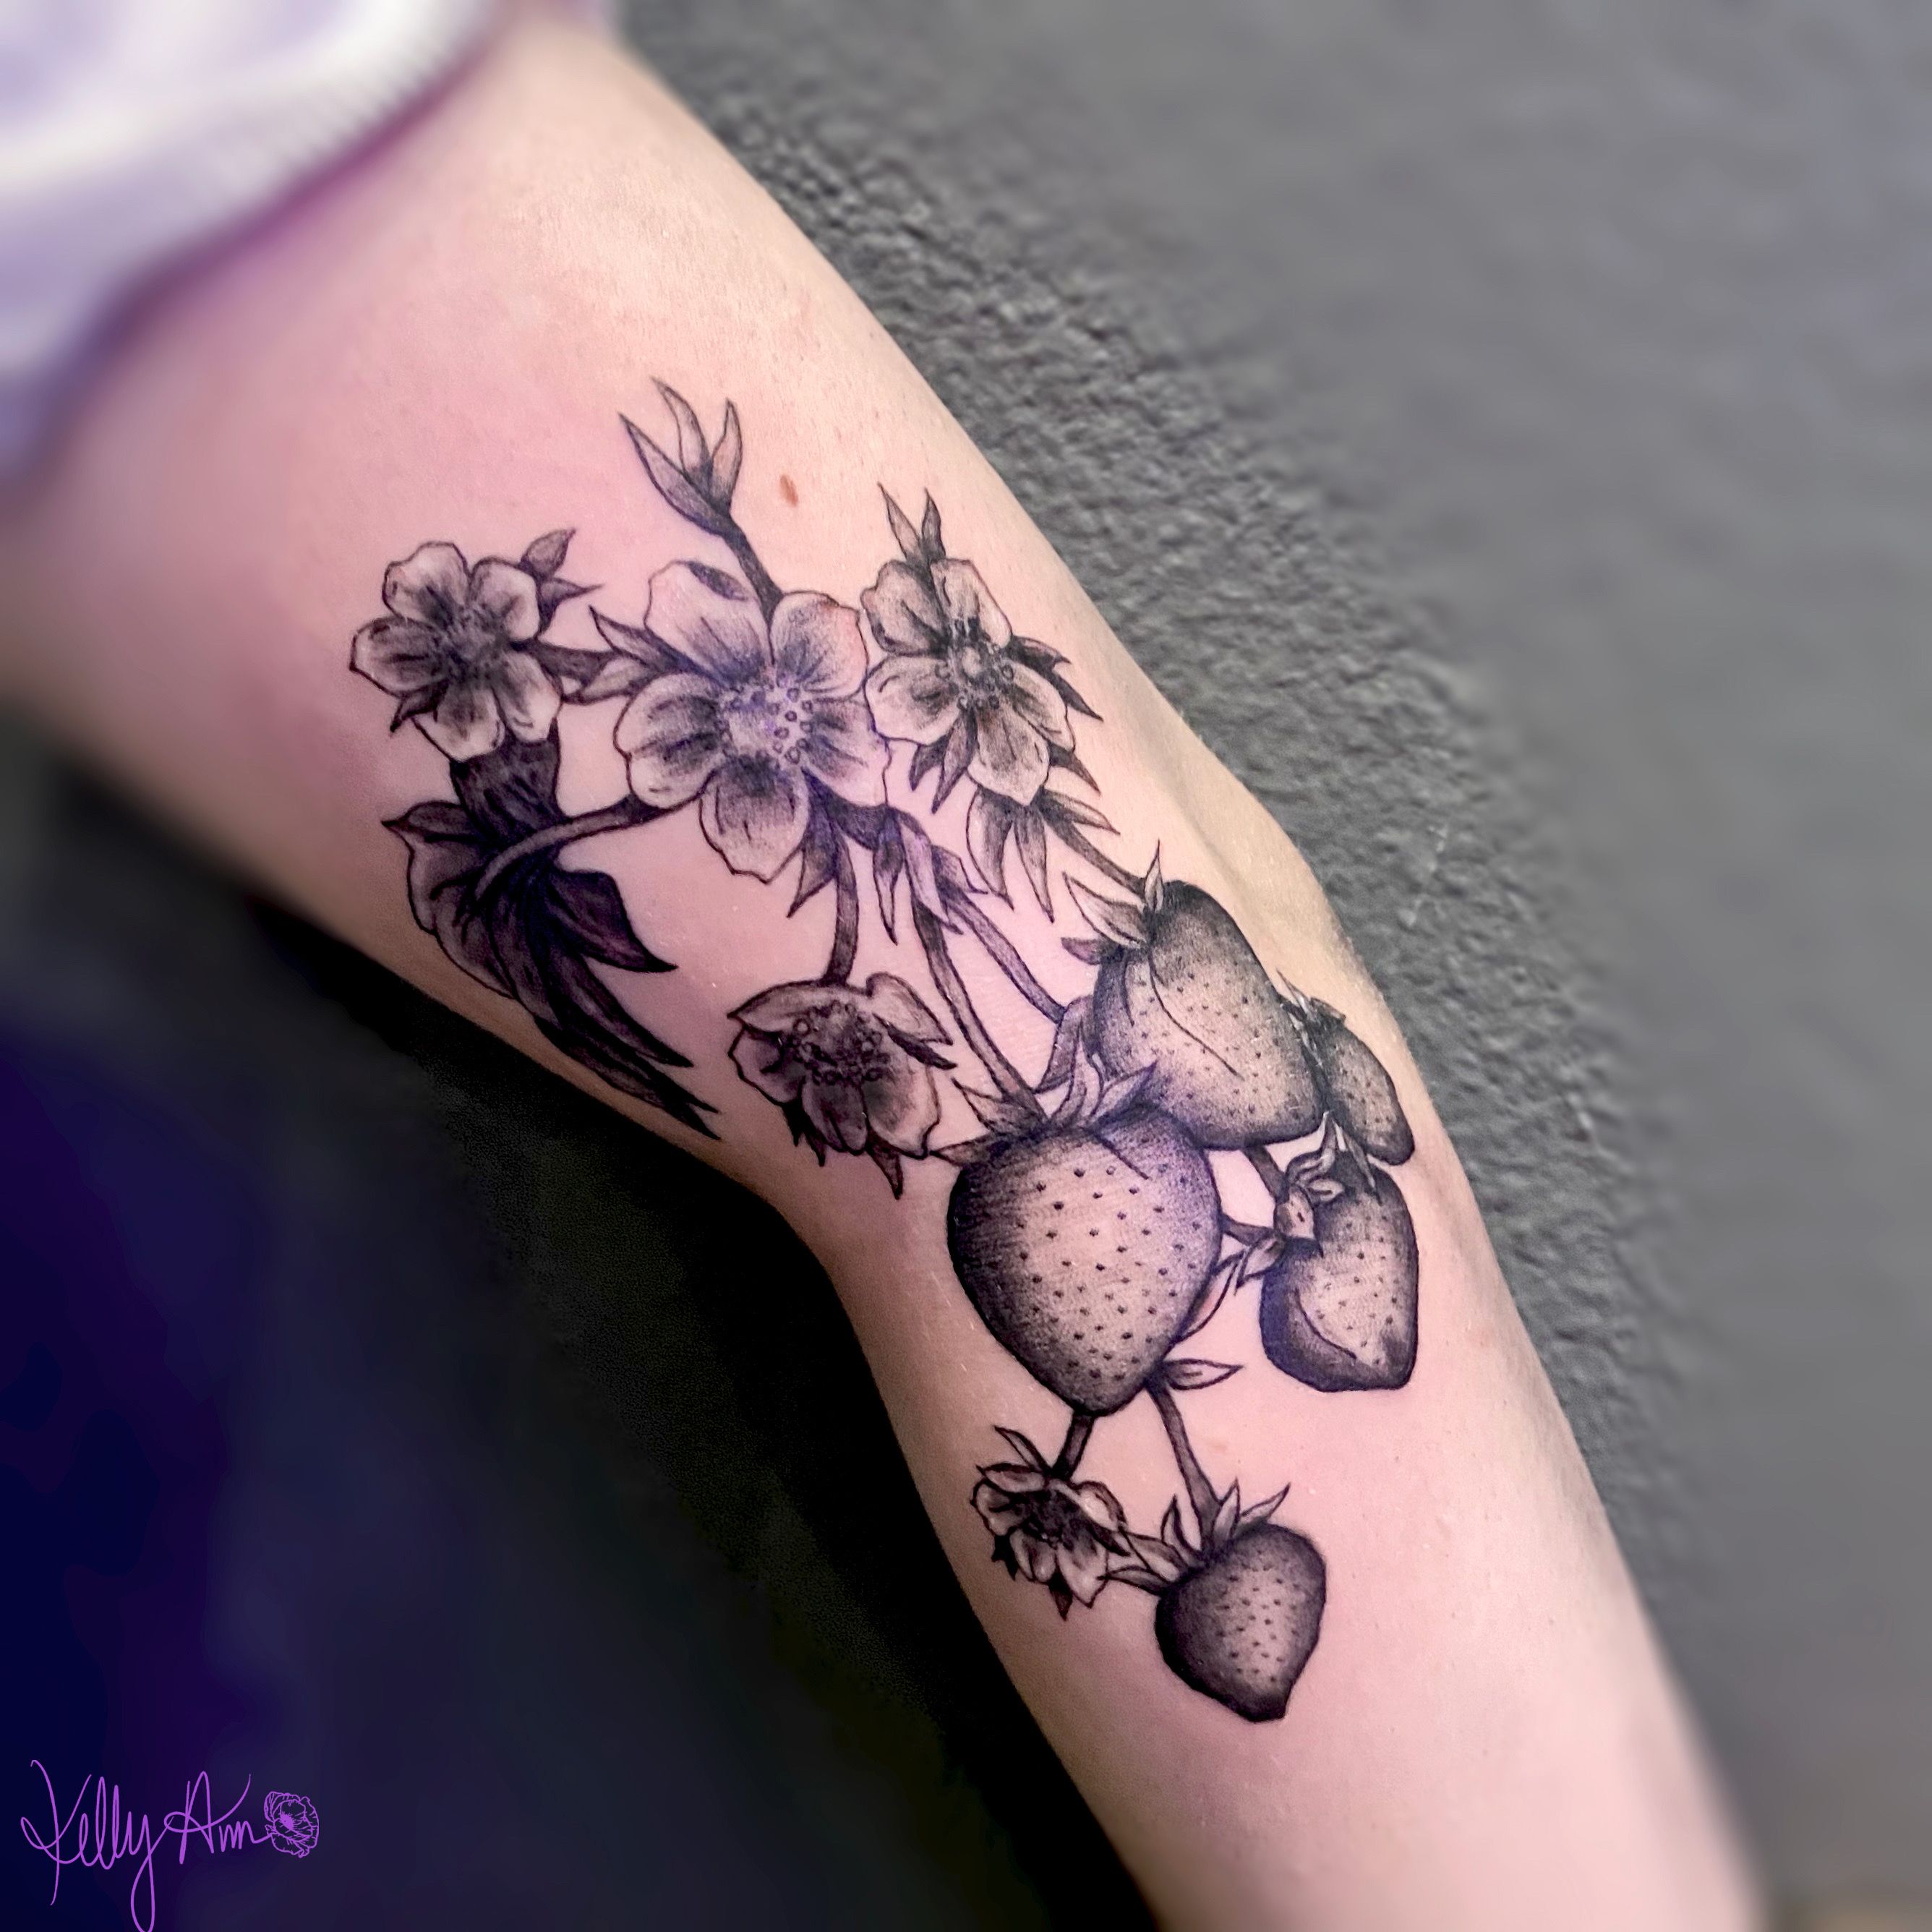 Tattoo uploaded by Jessica Fox • Made at @oakandironbflo • Tattoodo